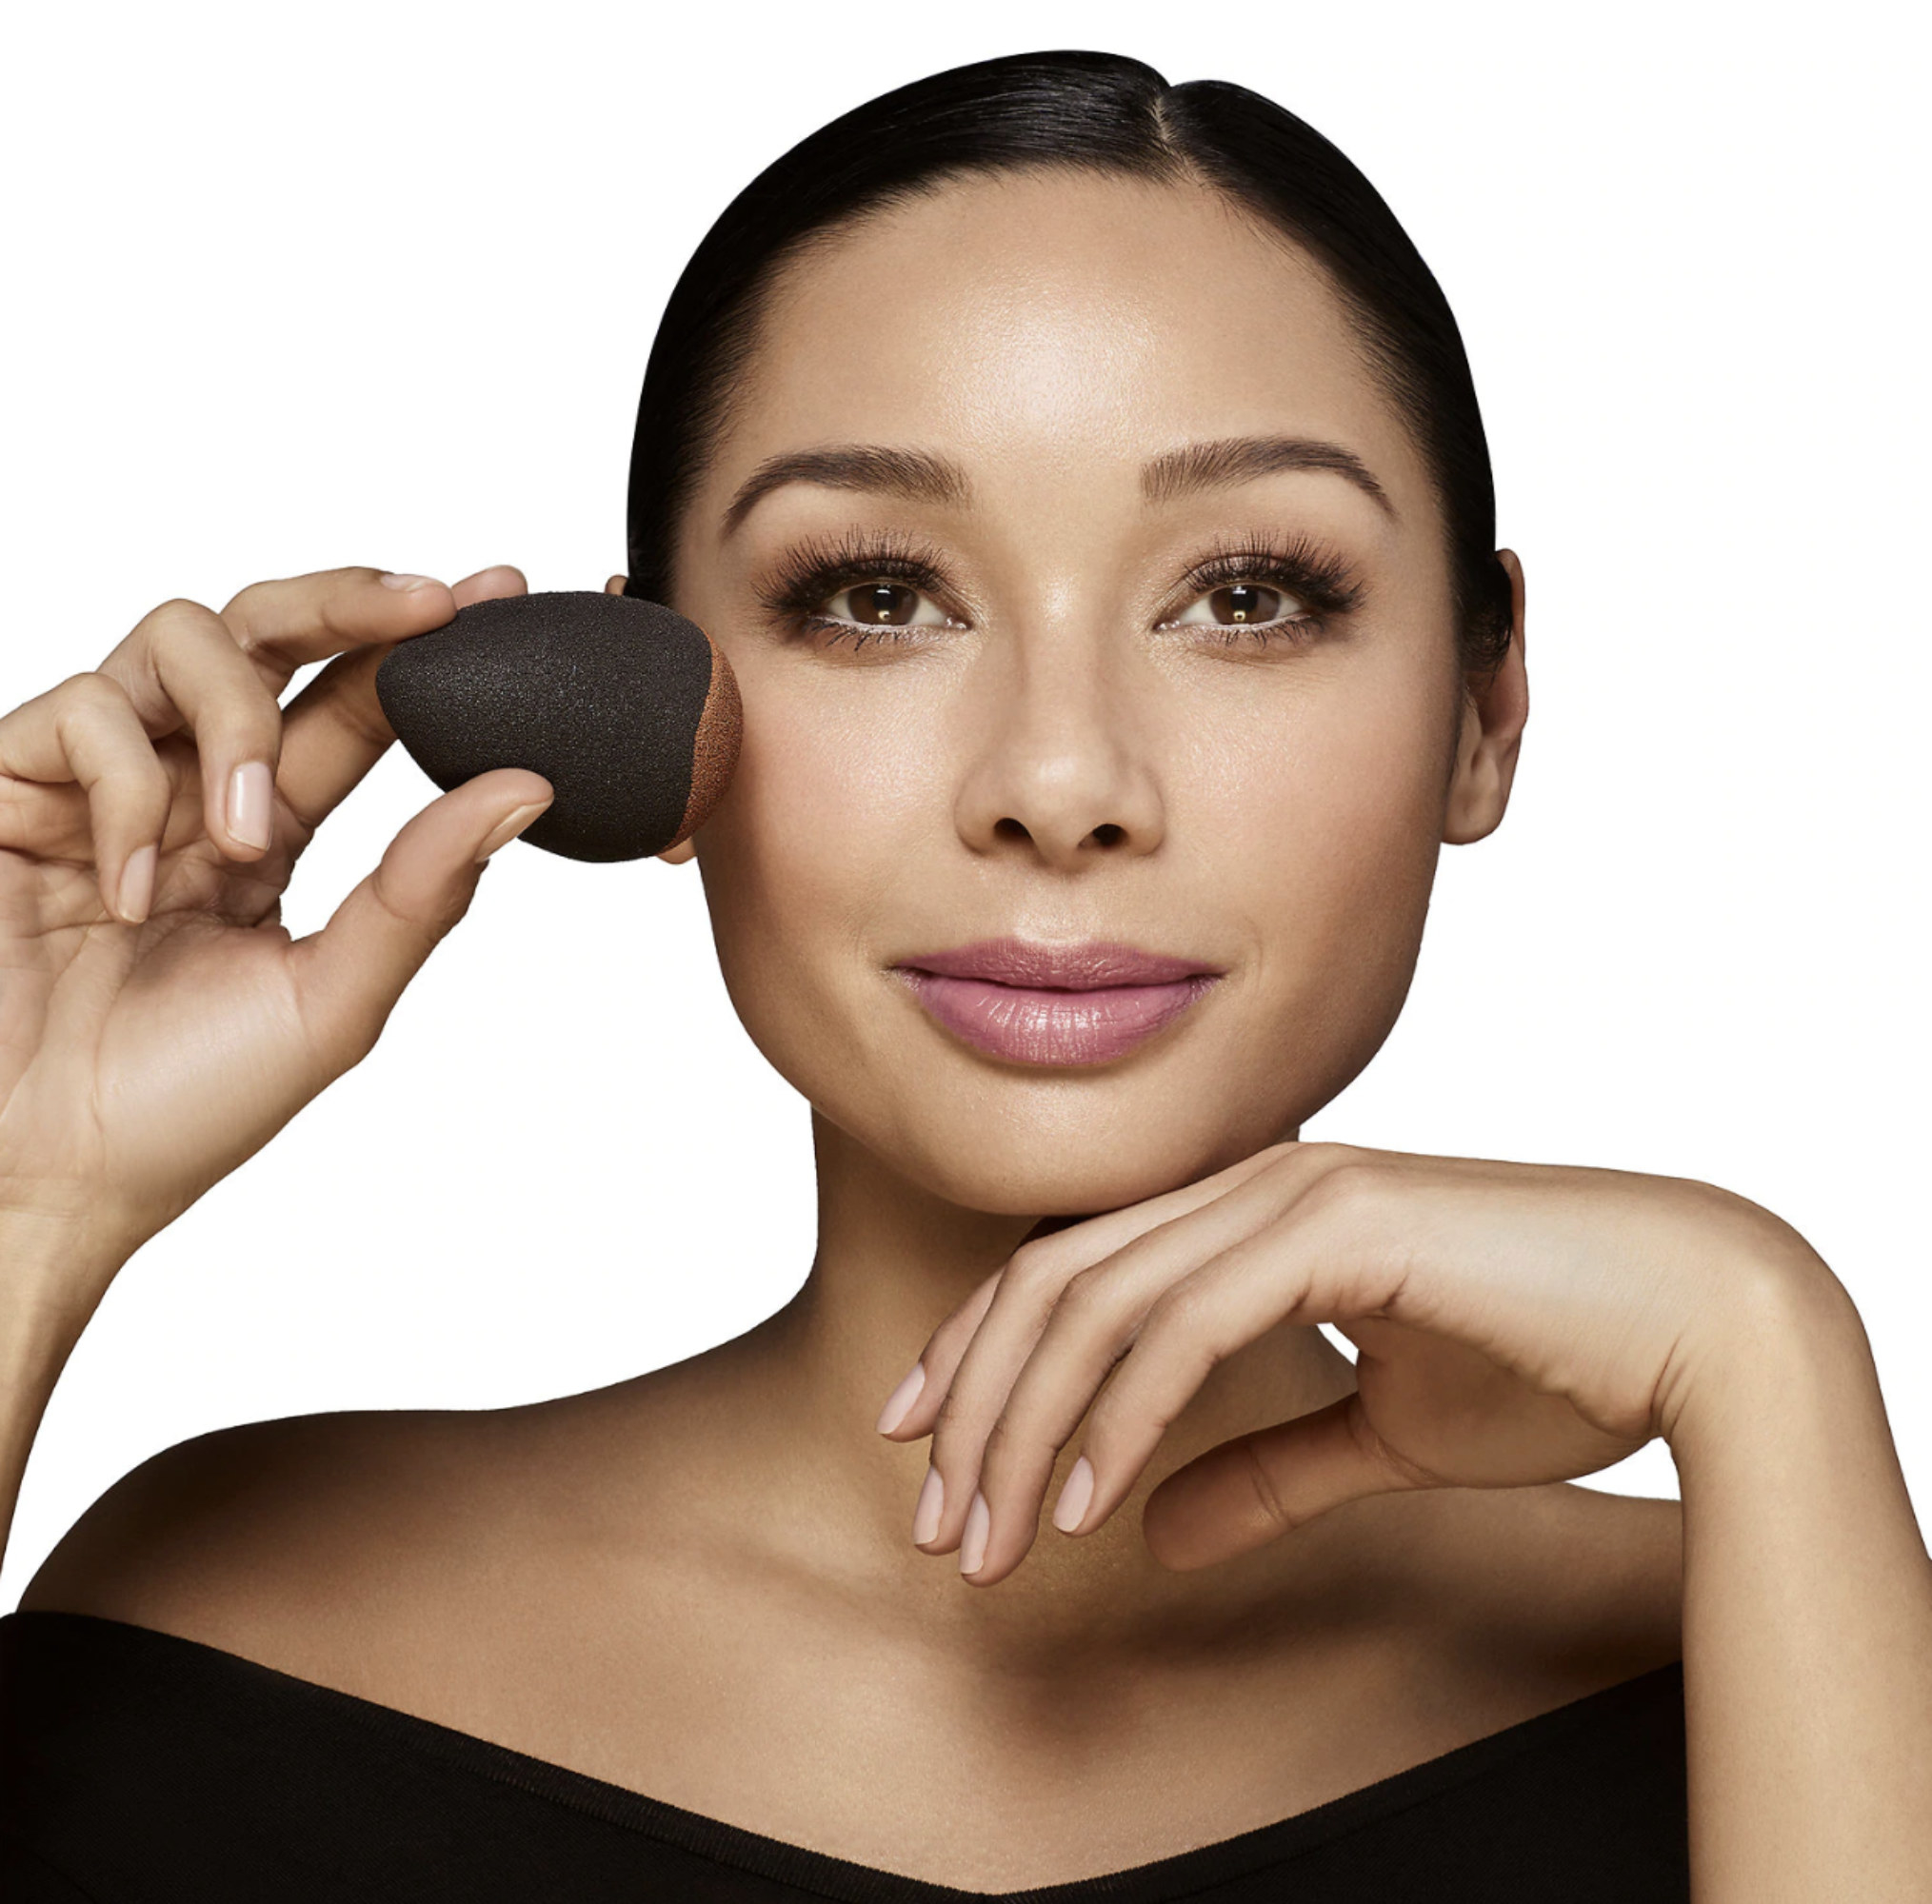 A model holding the black, egg-shaped beauty blender against their face